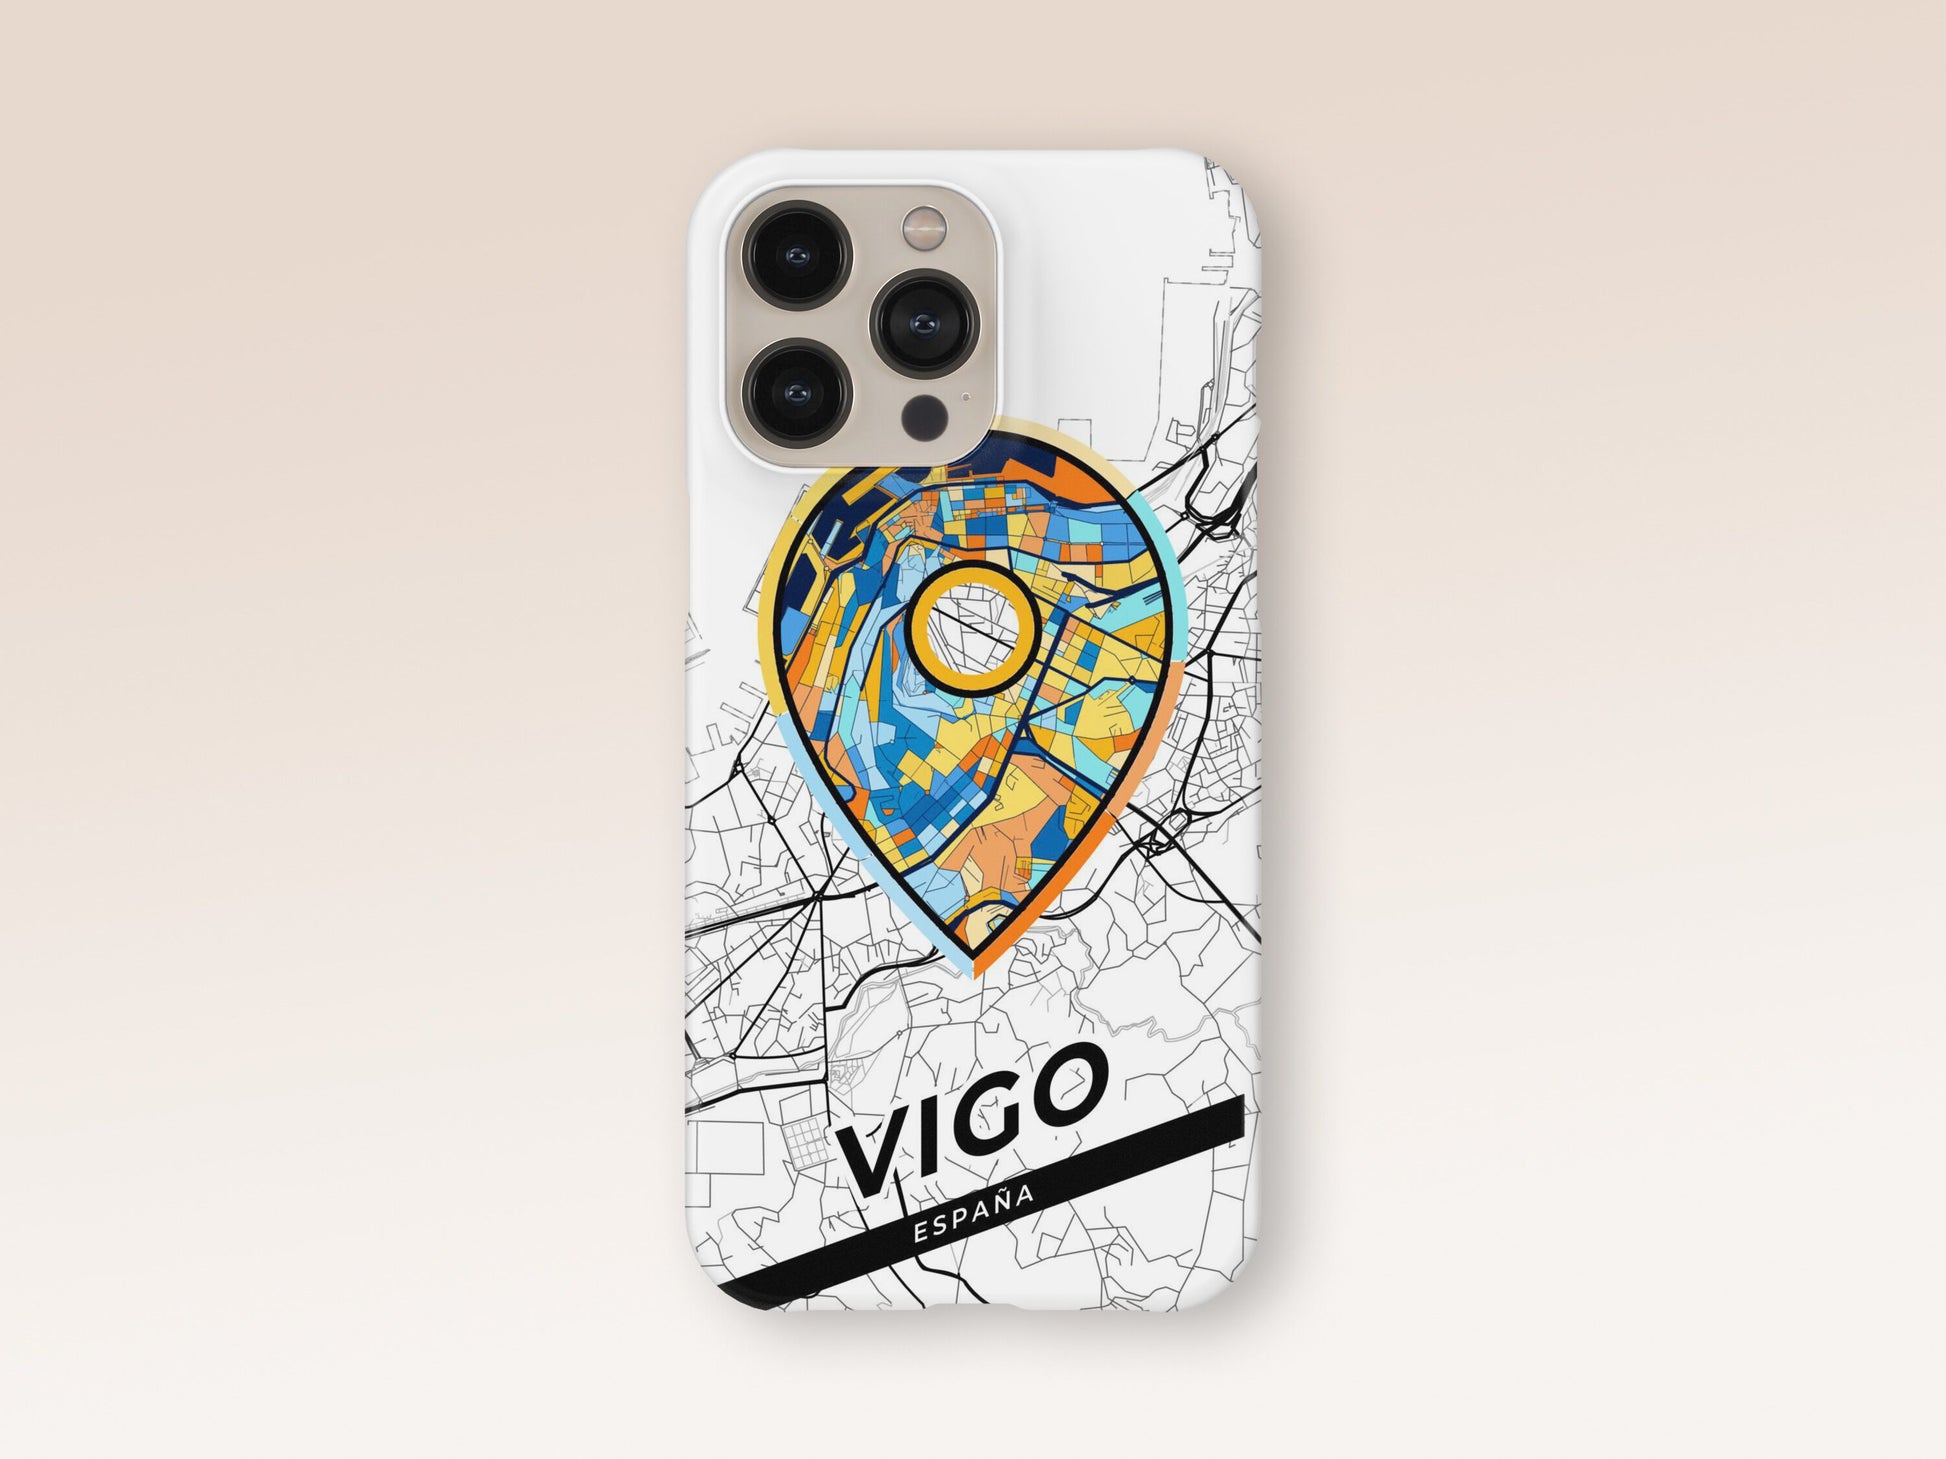 Vigo Spain slim phone case with colorful icon 1